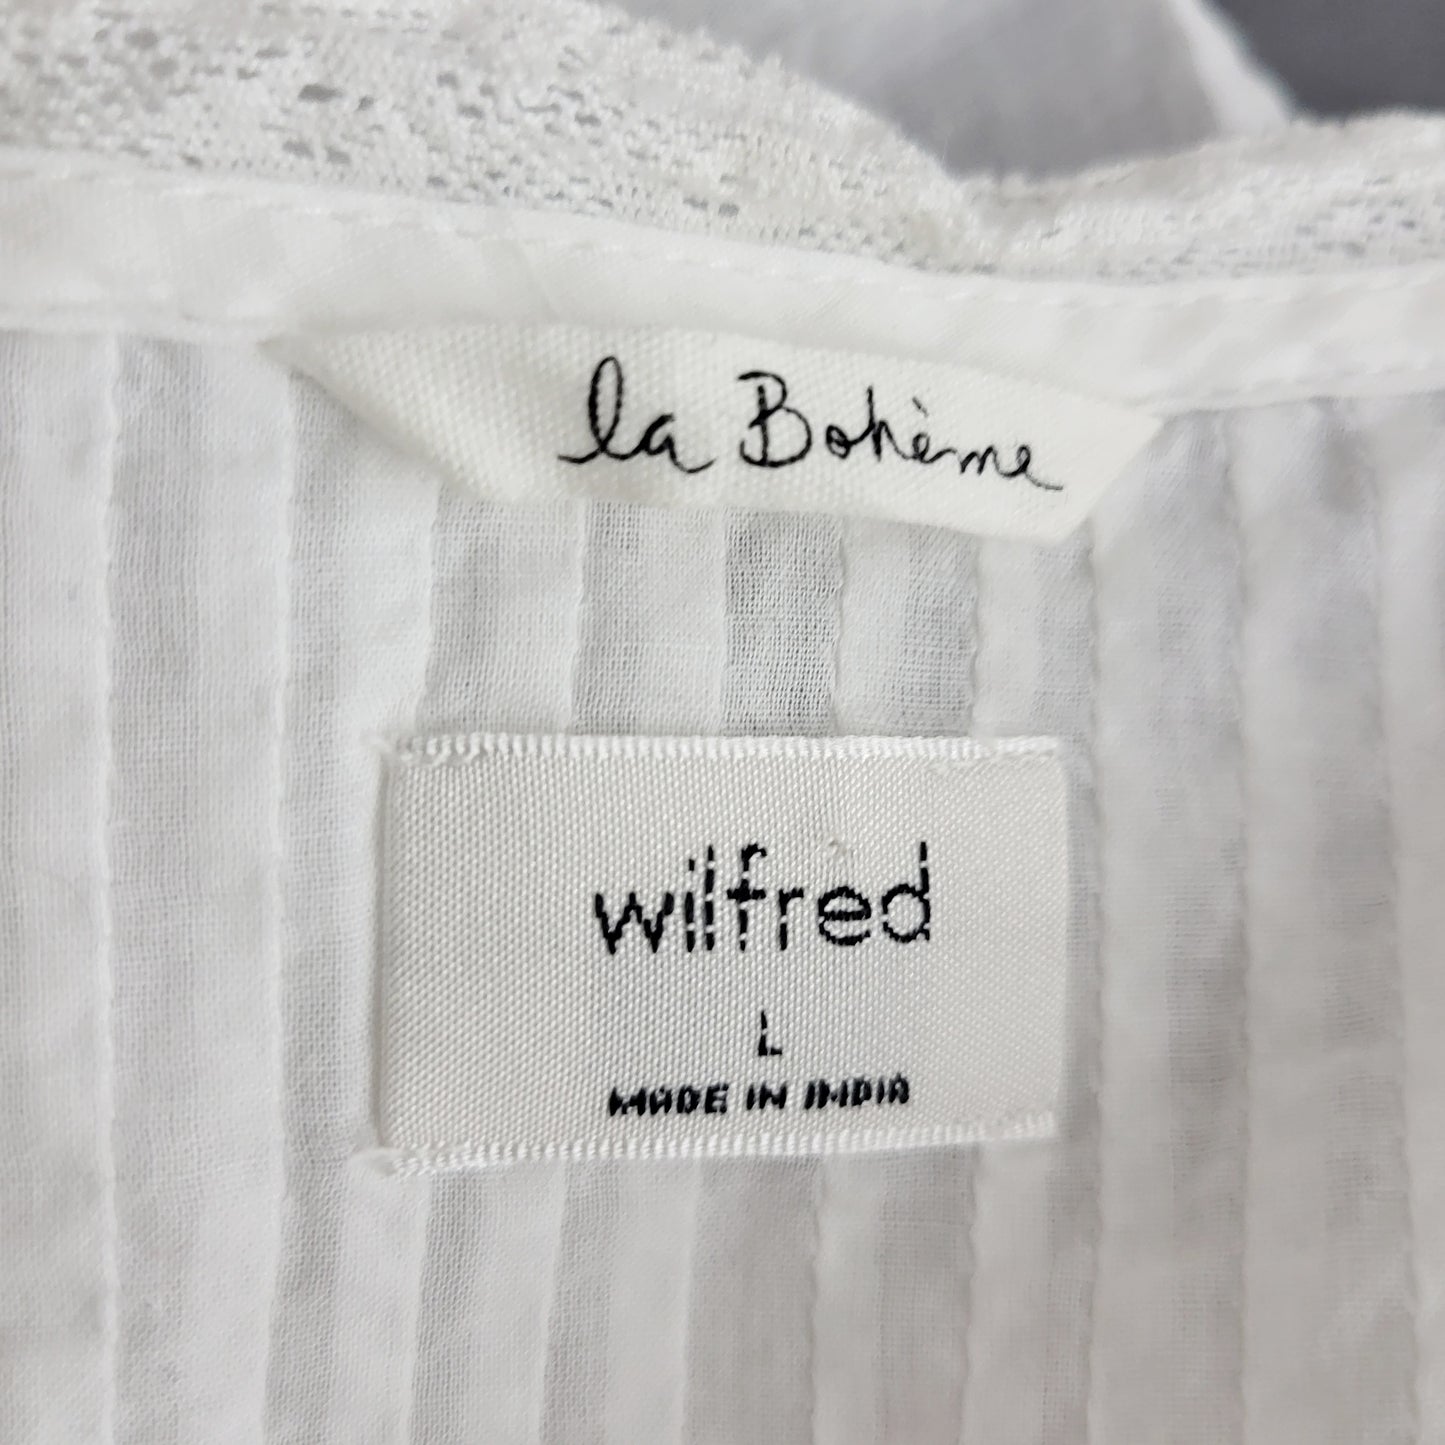 CHND2 - Aritzia Wilfred Delacroix La Boheme White Ruffle Sleeve Tie Top Tank, size large, good condition